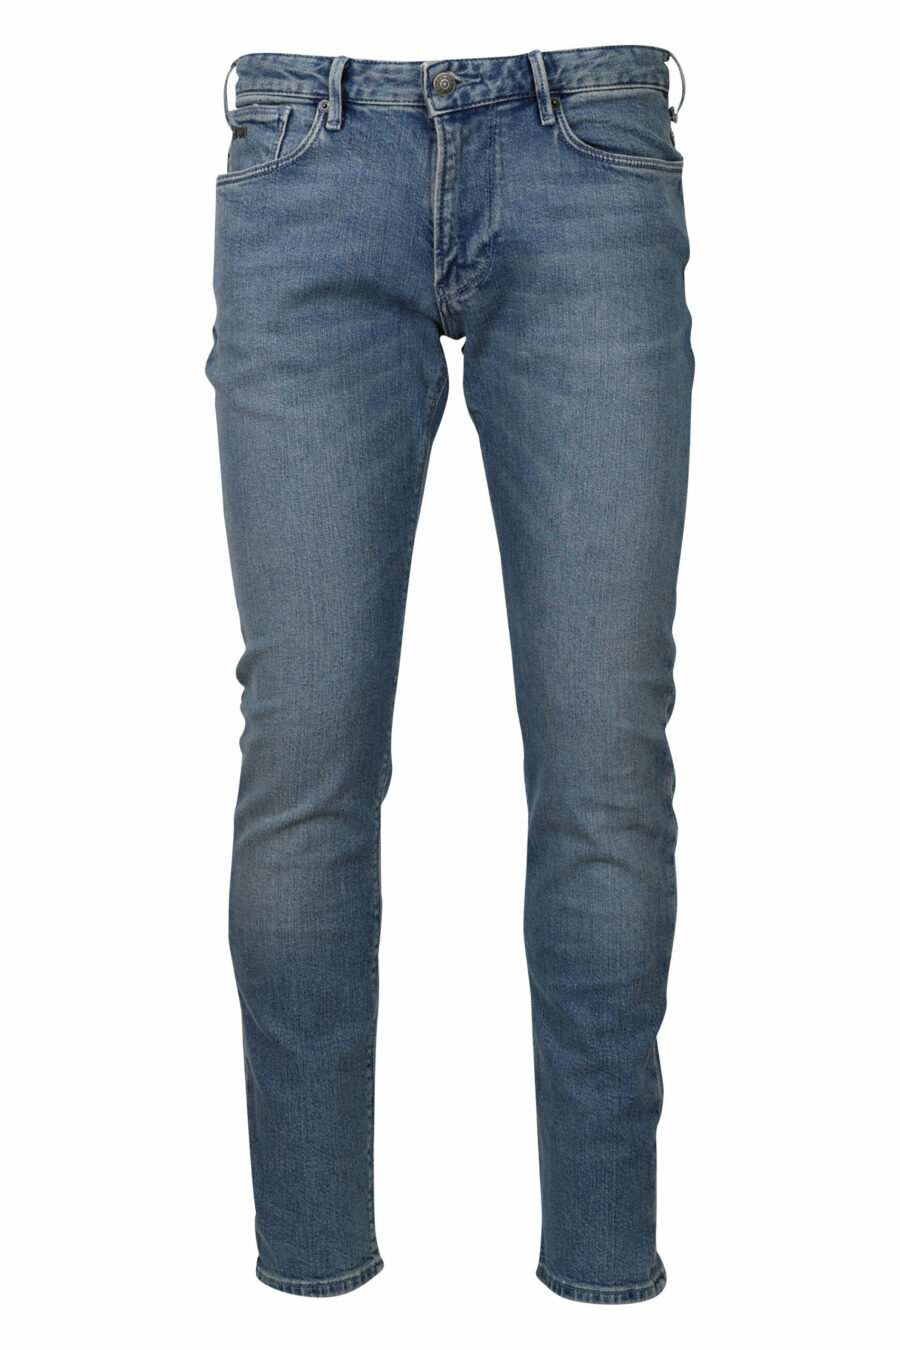 Hellblaue Jeans mit Metalladler - 8057767427009 1 skaliert